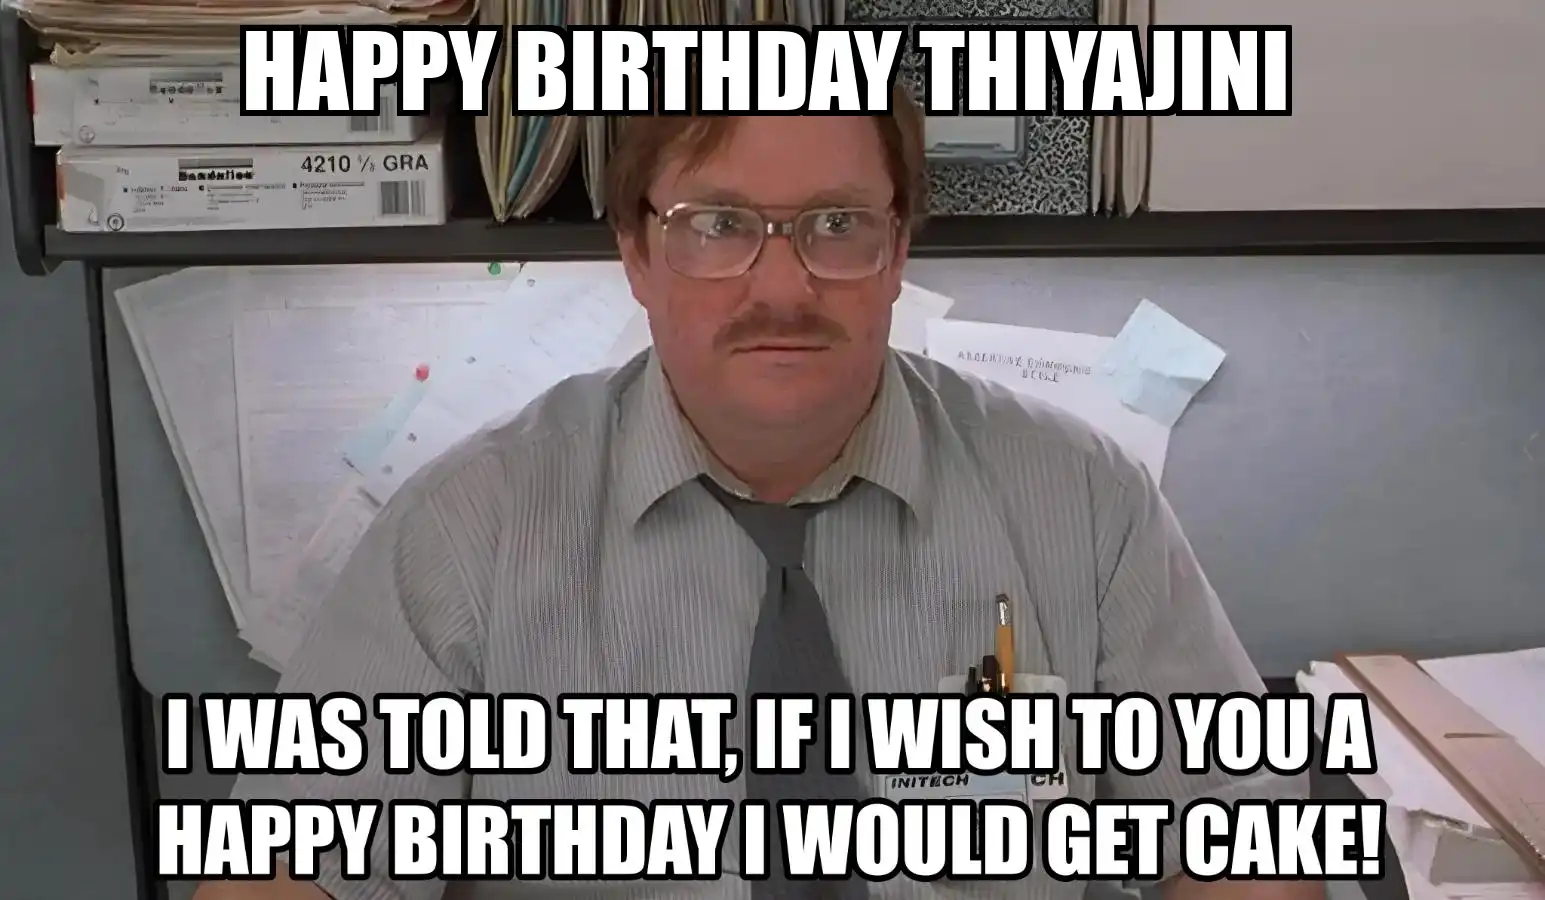 Happy Birthday Thiyajini I Would Get A Cake Meme